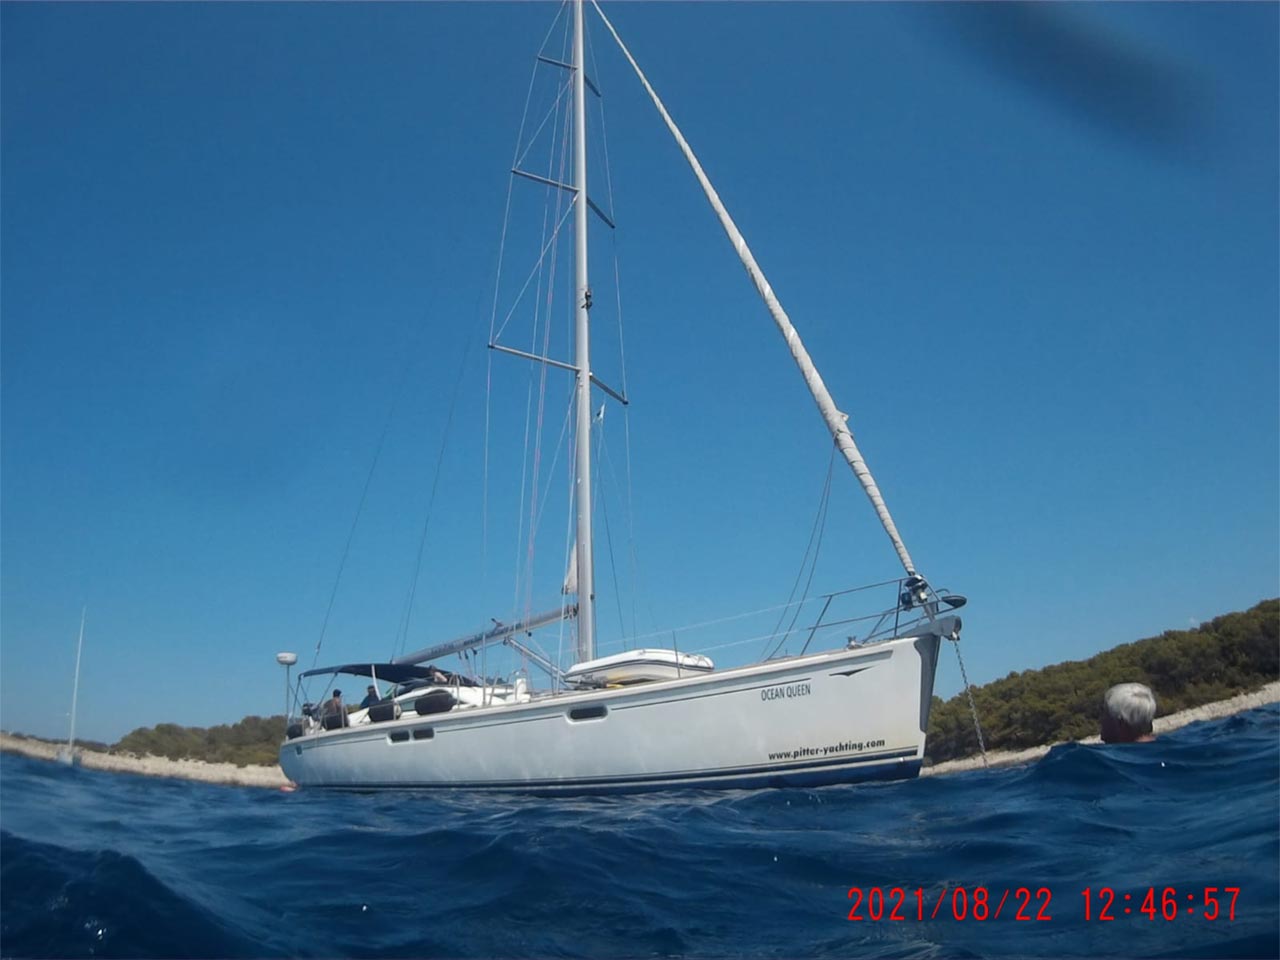 My first sailing trip